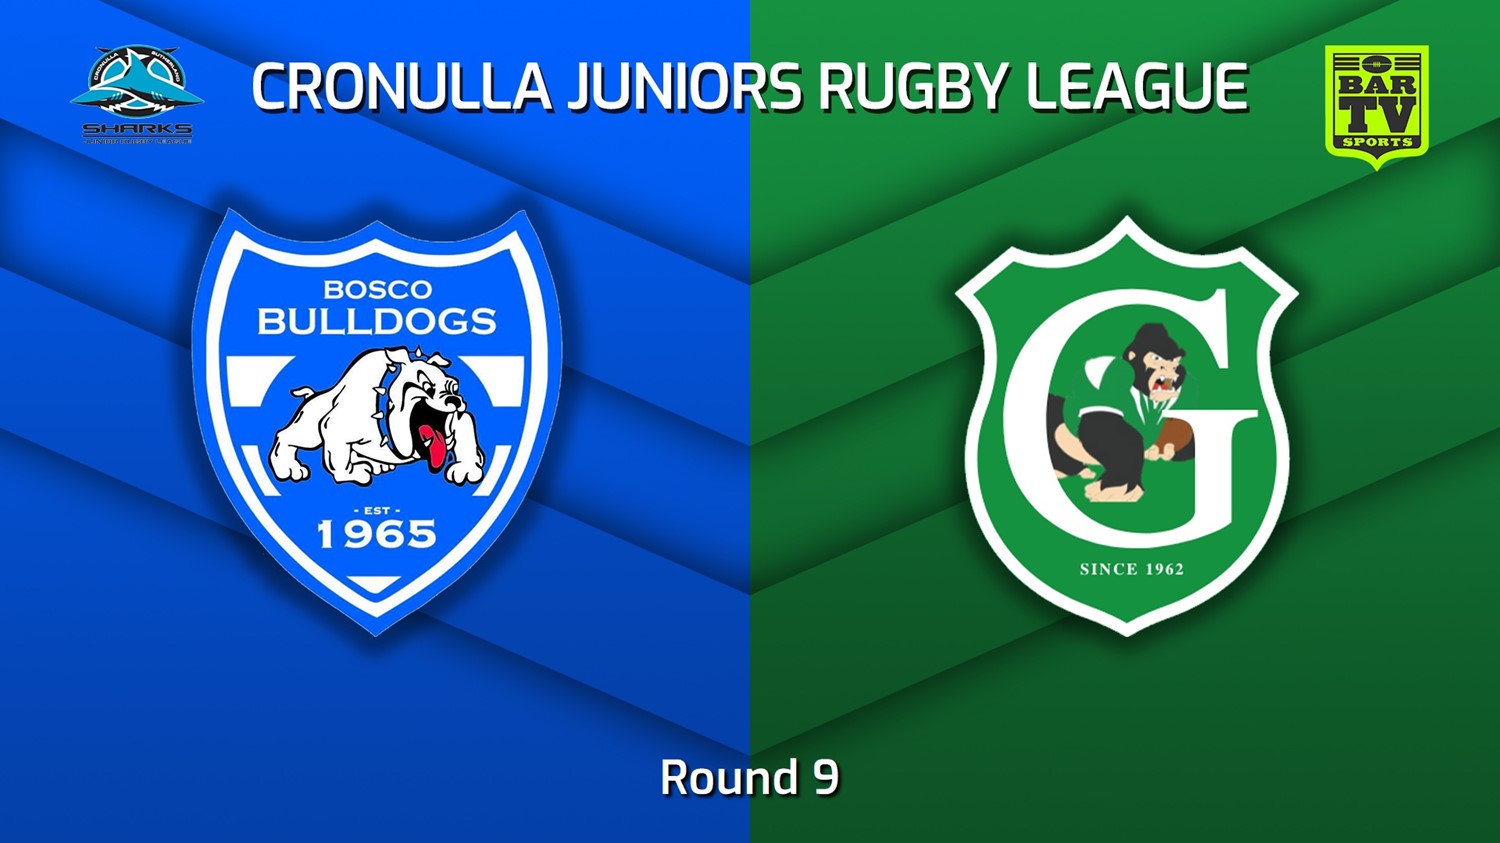 220702-Cronulla Juniors Round 9 - St John Bosco Bulldogs v Gymea Gorillas Minigame Slate Image